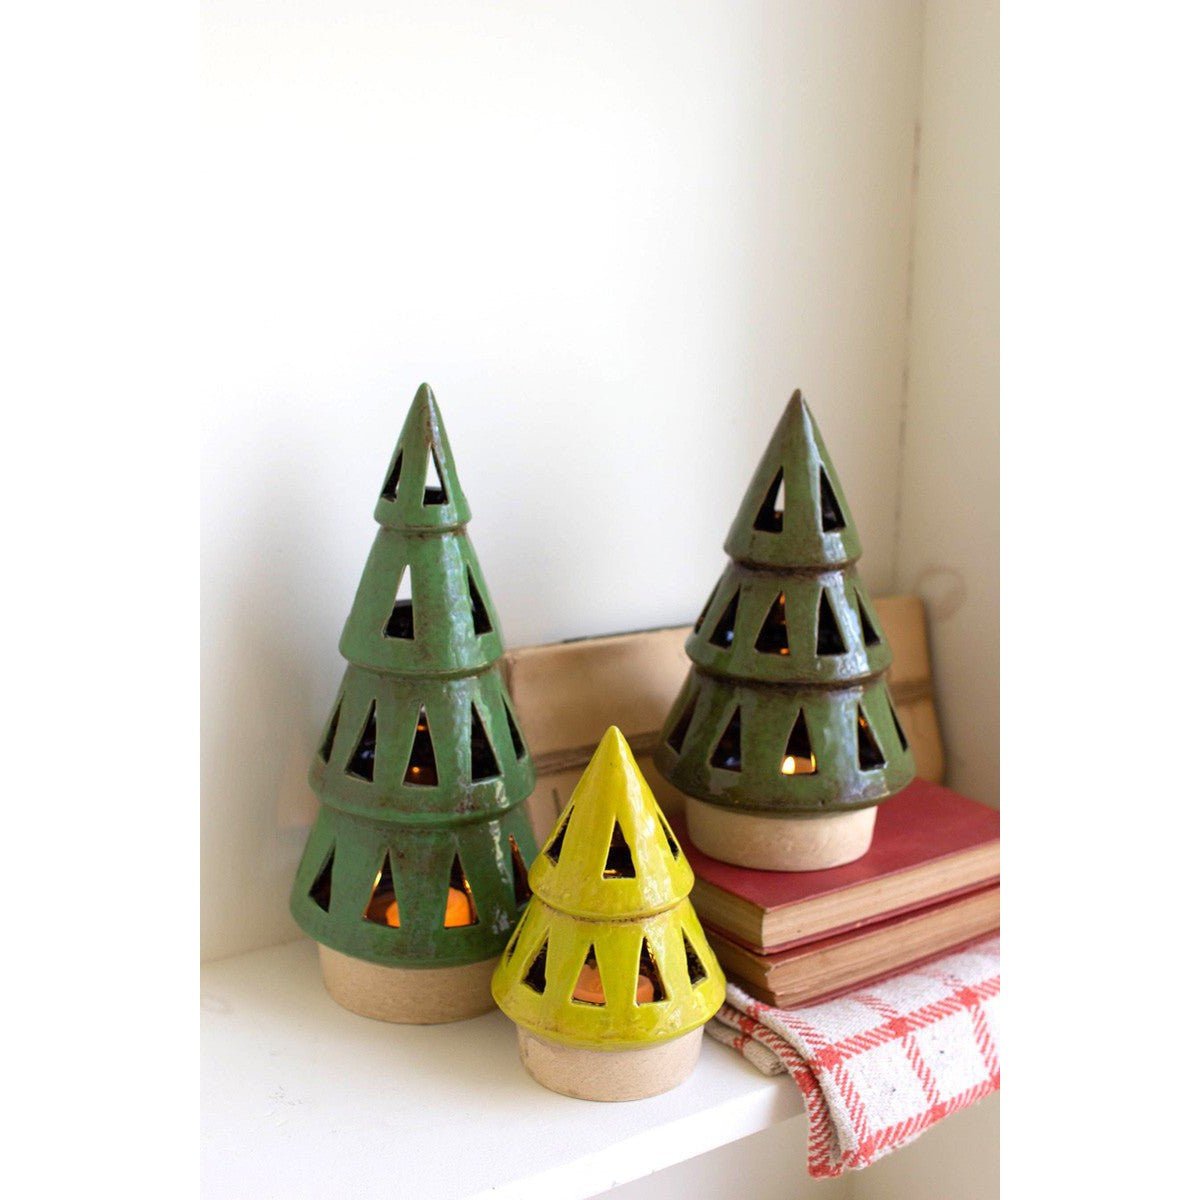 Kalalou set of three ceramic christmas tree lanterns - CDV2142 - CDV2142 - Kalalou - $83.95